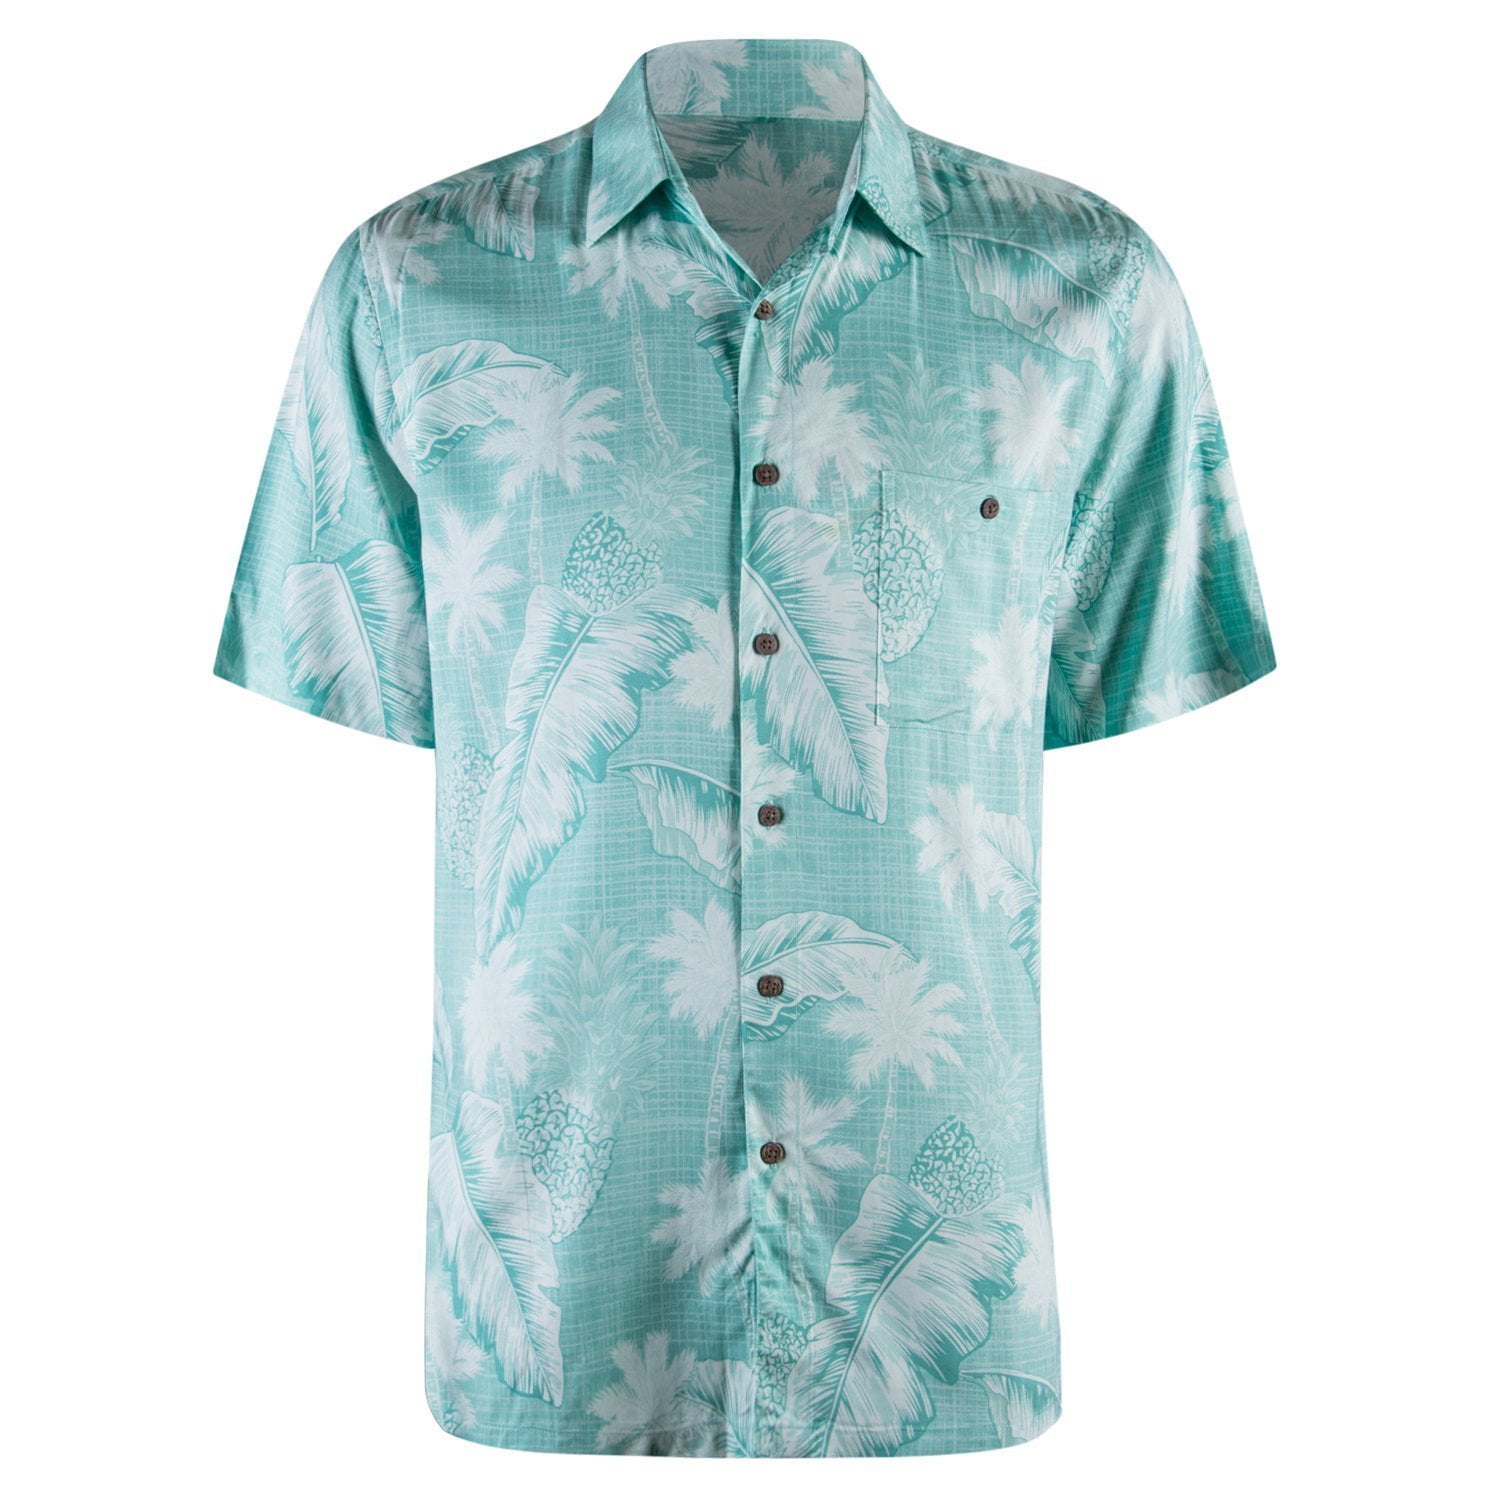 Campia Men's Big and Tall Rayon Print Shirt (Teal 17, XLT) - Walmart.com